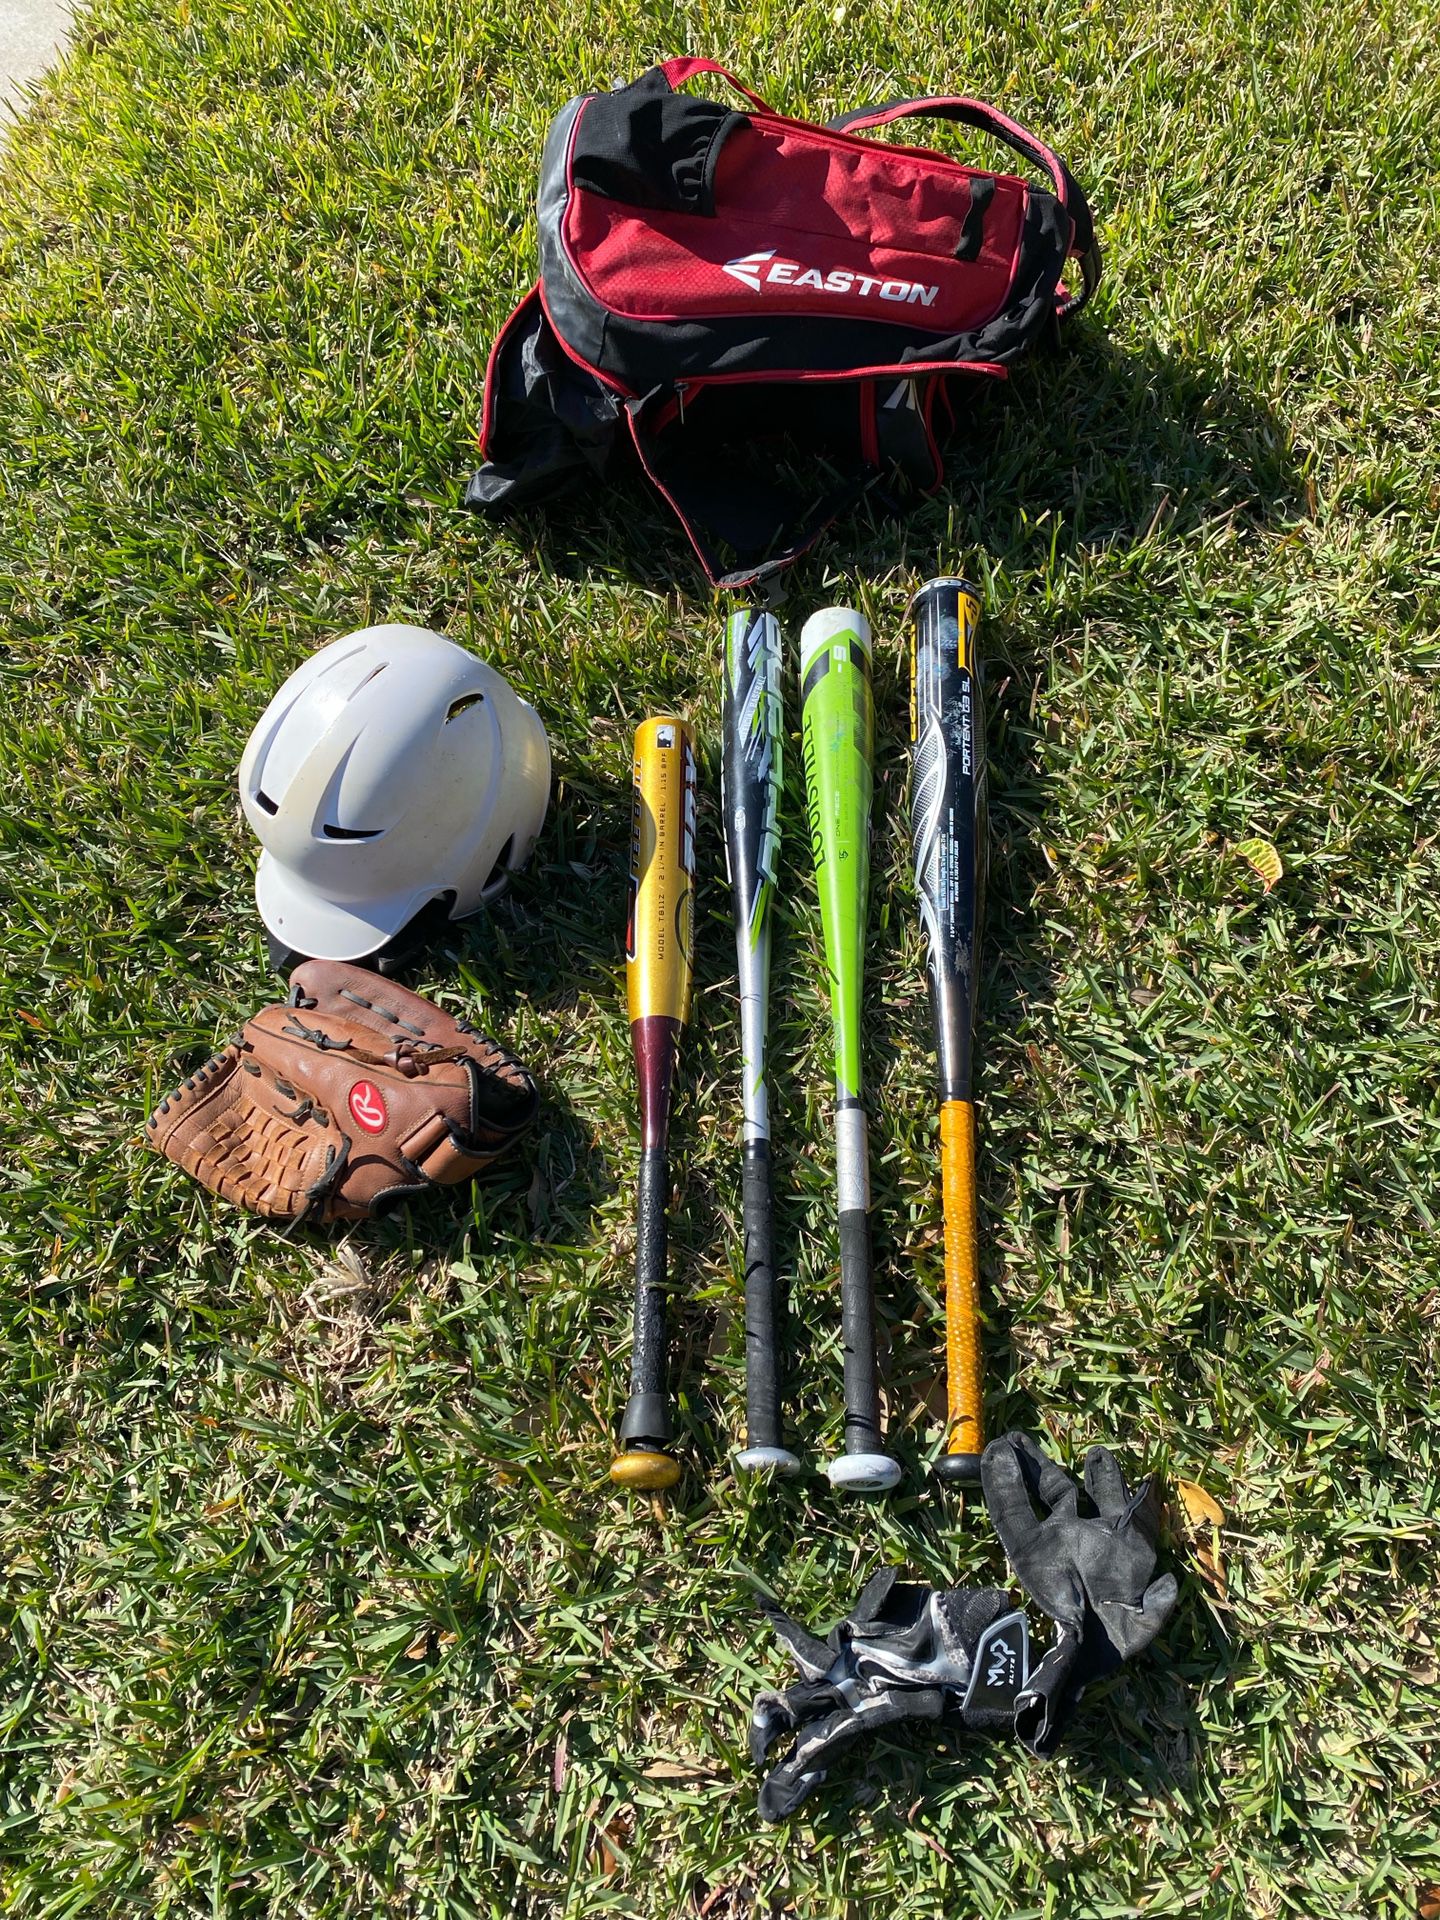 Baseball Equipment 